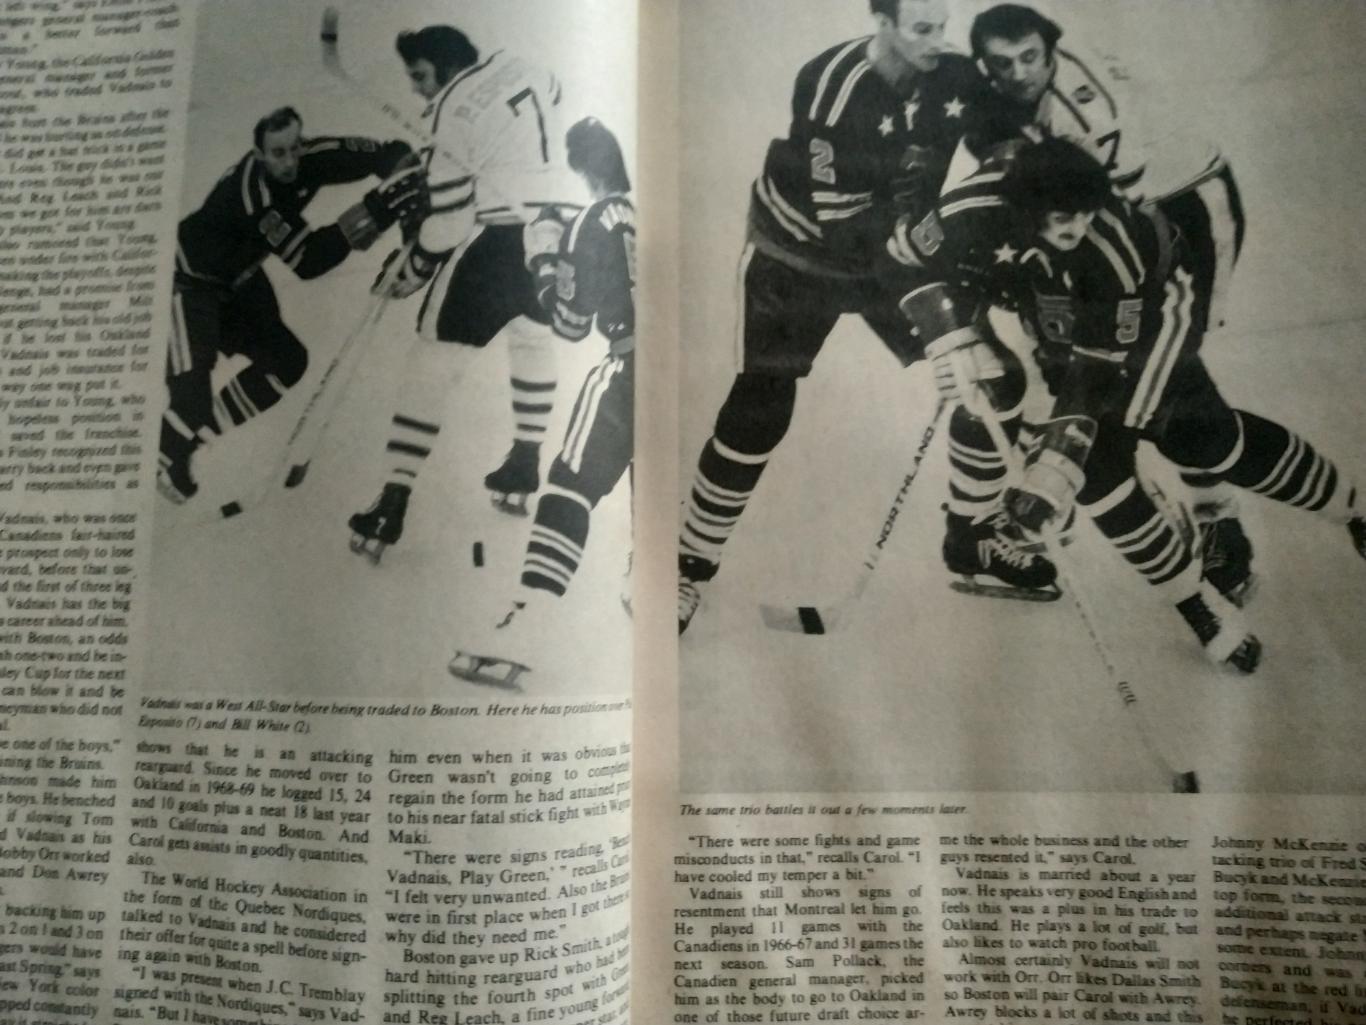 ЖУРНАЛ НХЛ СПОРТ СПЕШИАЛ ХОККЕЙ FEB 1973 NHL SPORTS SPECIAL HOCKEY 5